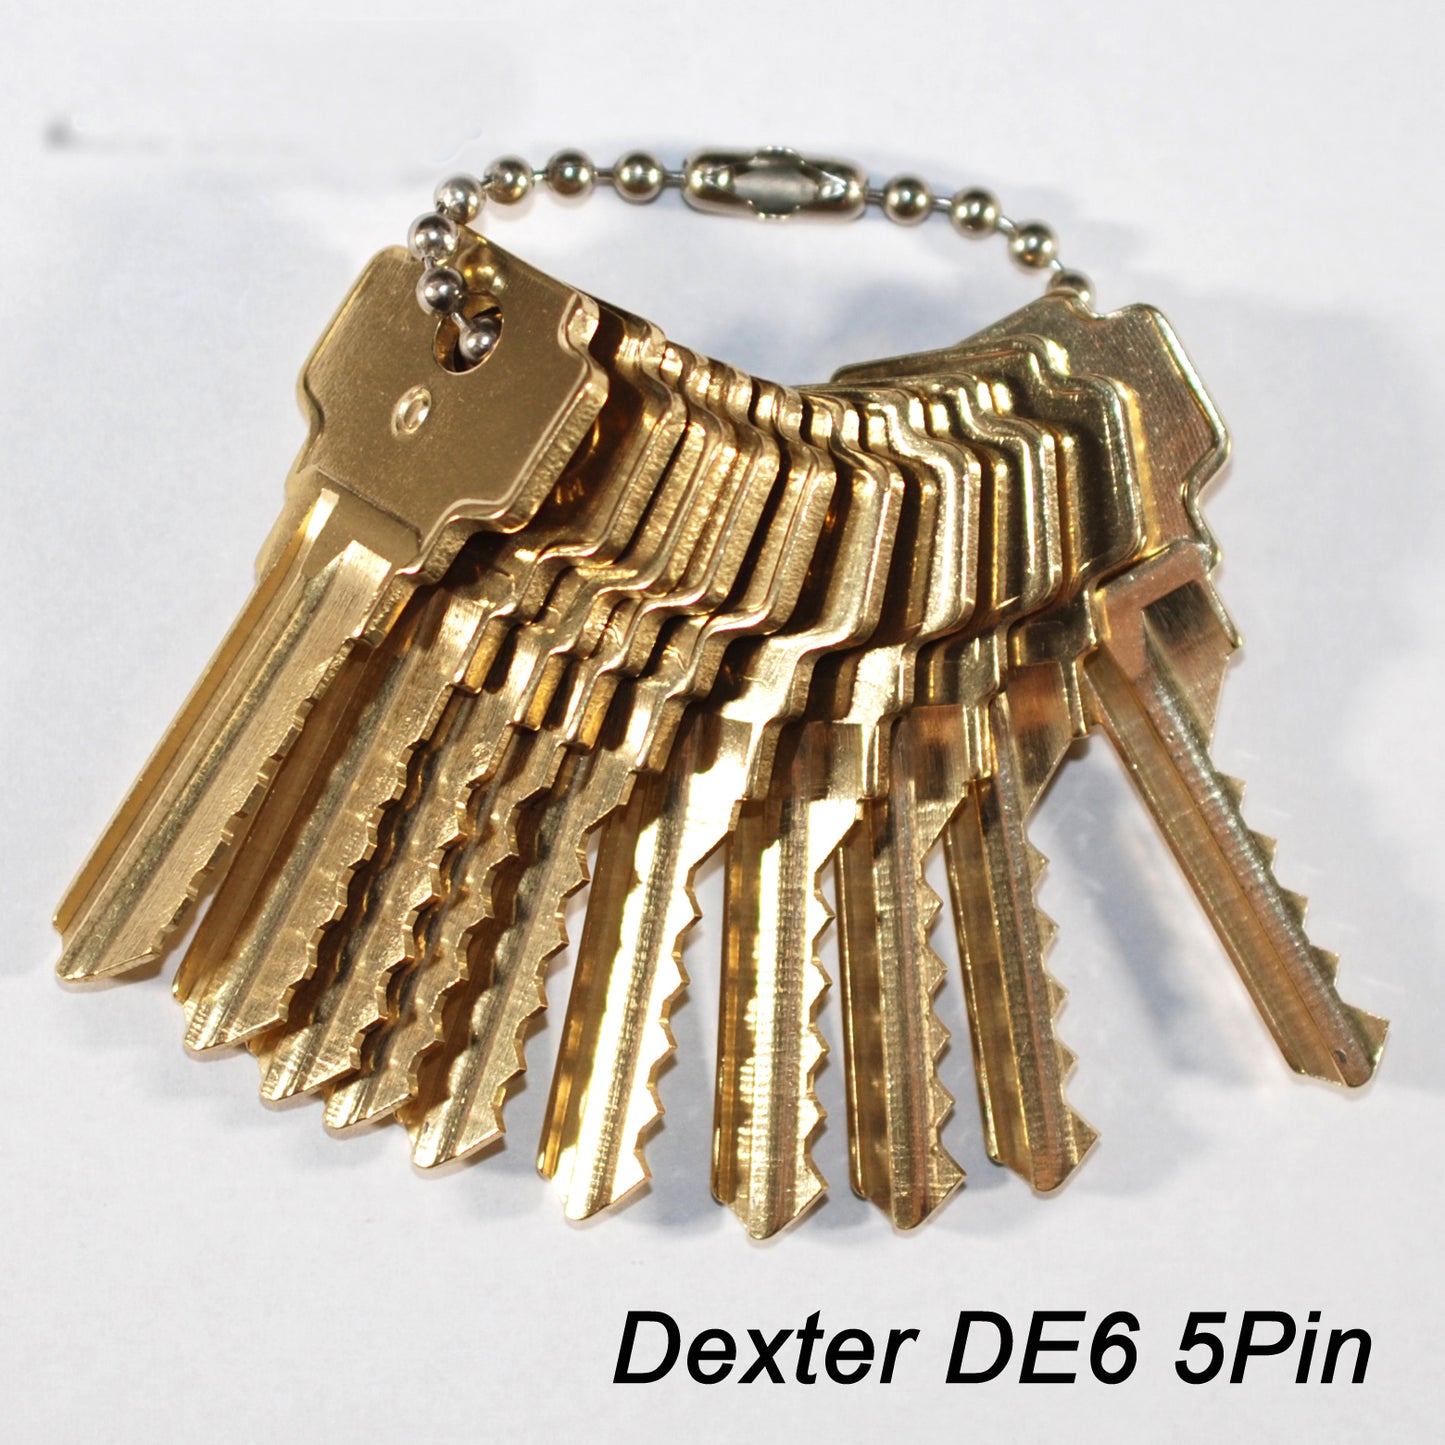 Dexter Lock DE6 Space and Depth Keys ~ DSD#025, C16